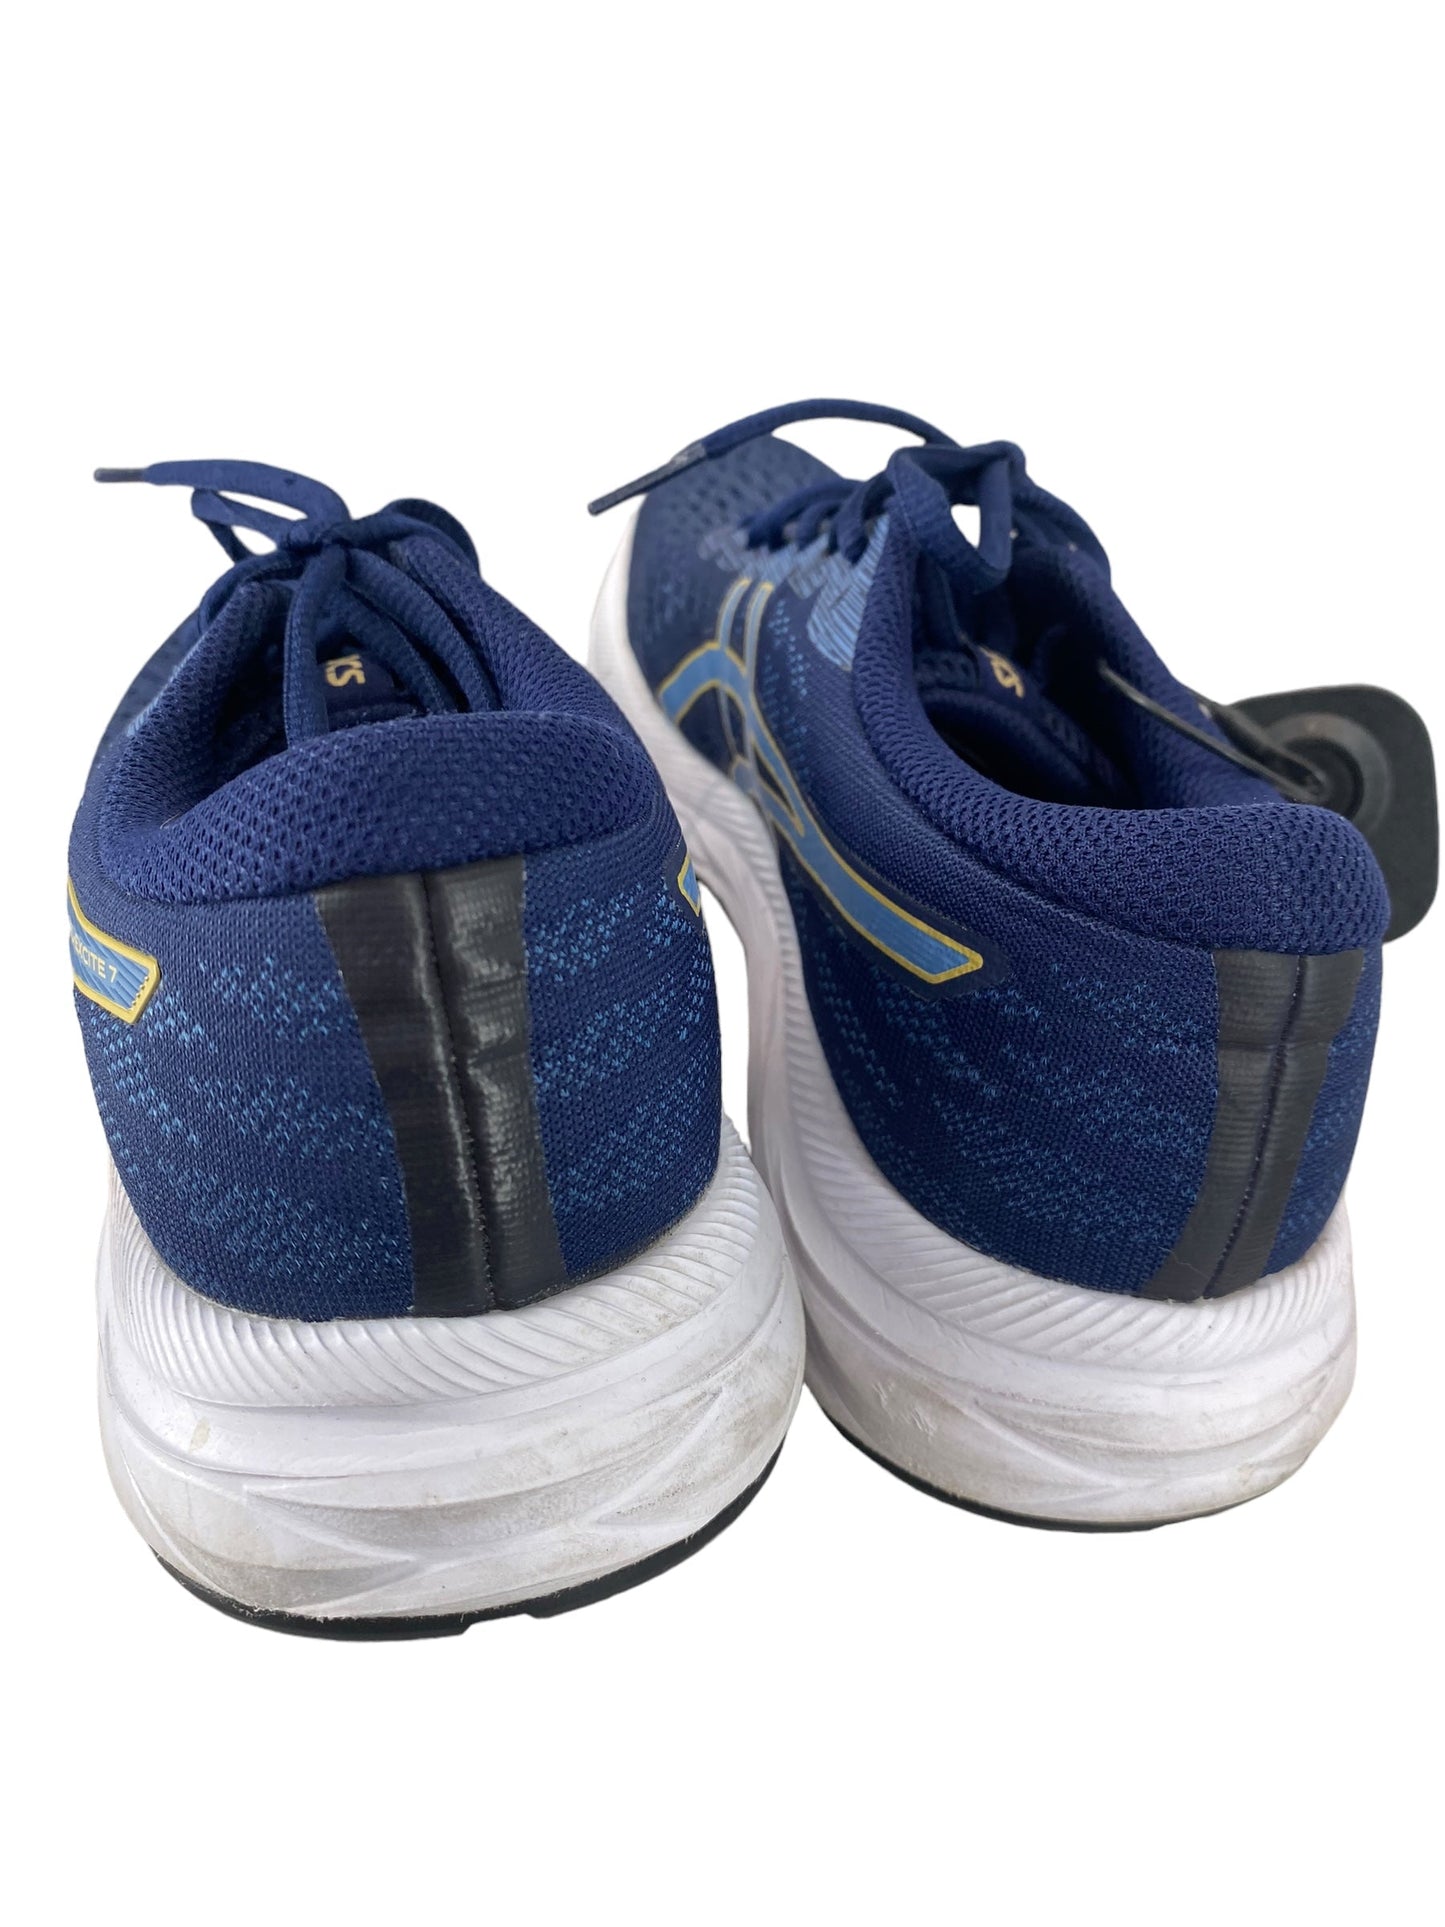 Navy Shoes Athletic Asics, Size 8